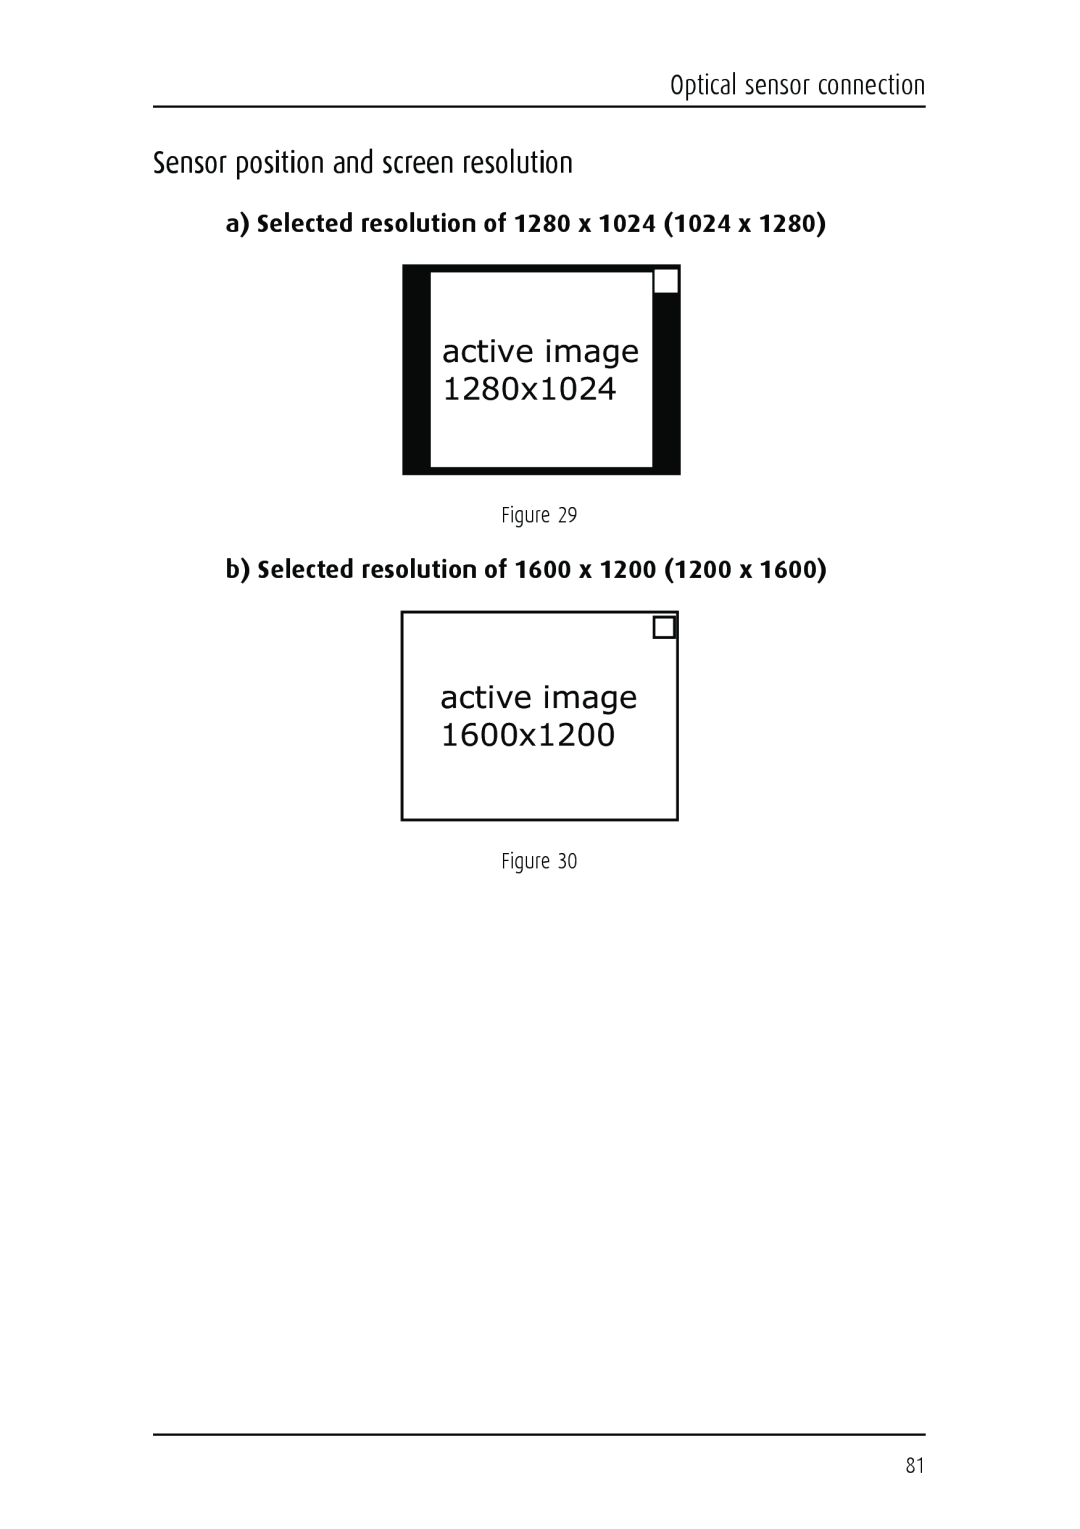 Barco MGP 15 Sensor position and screen resolution, active image, Optical sensor connection, a Selected resolution of 